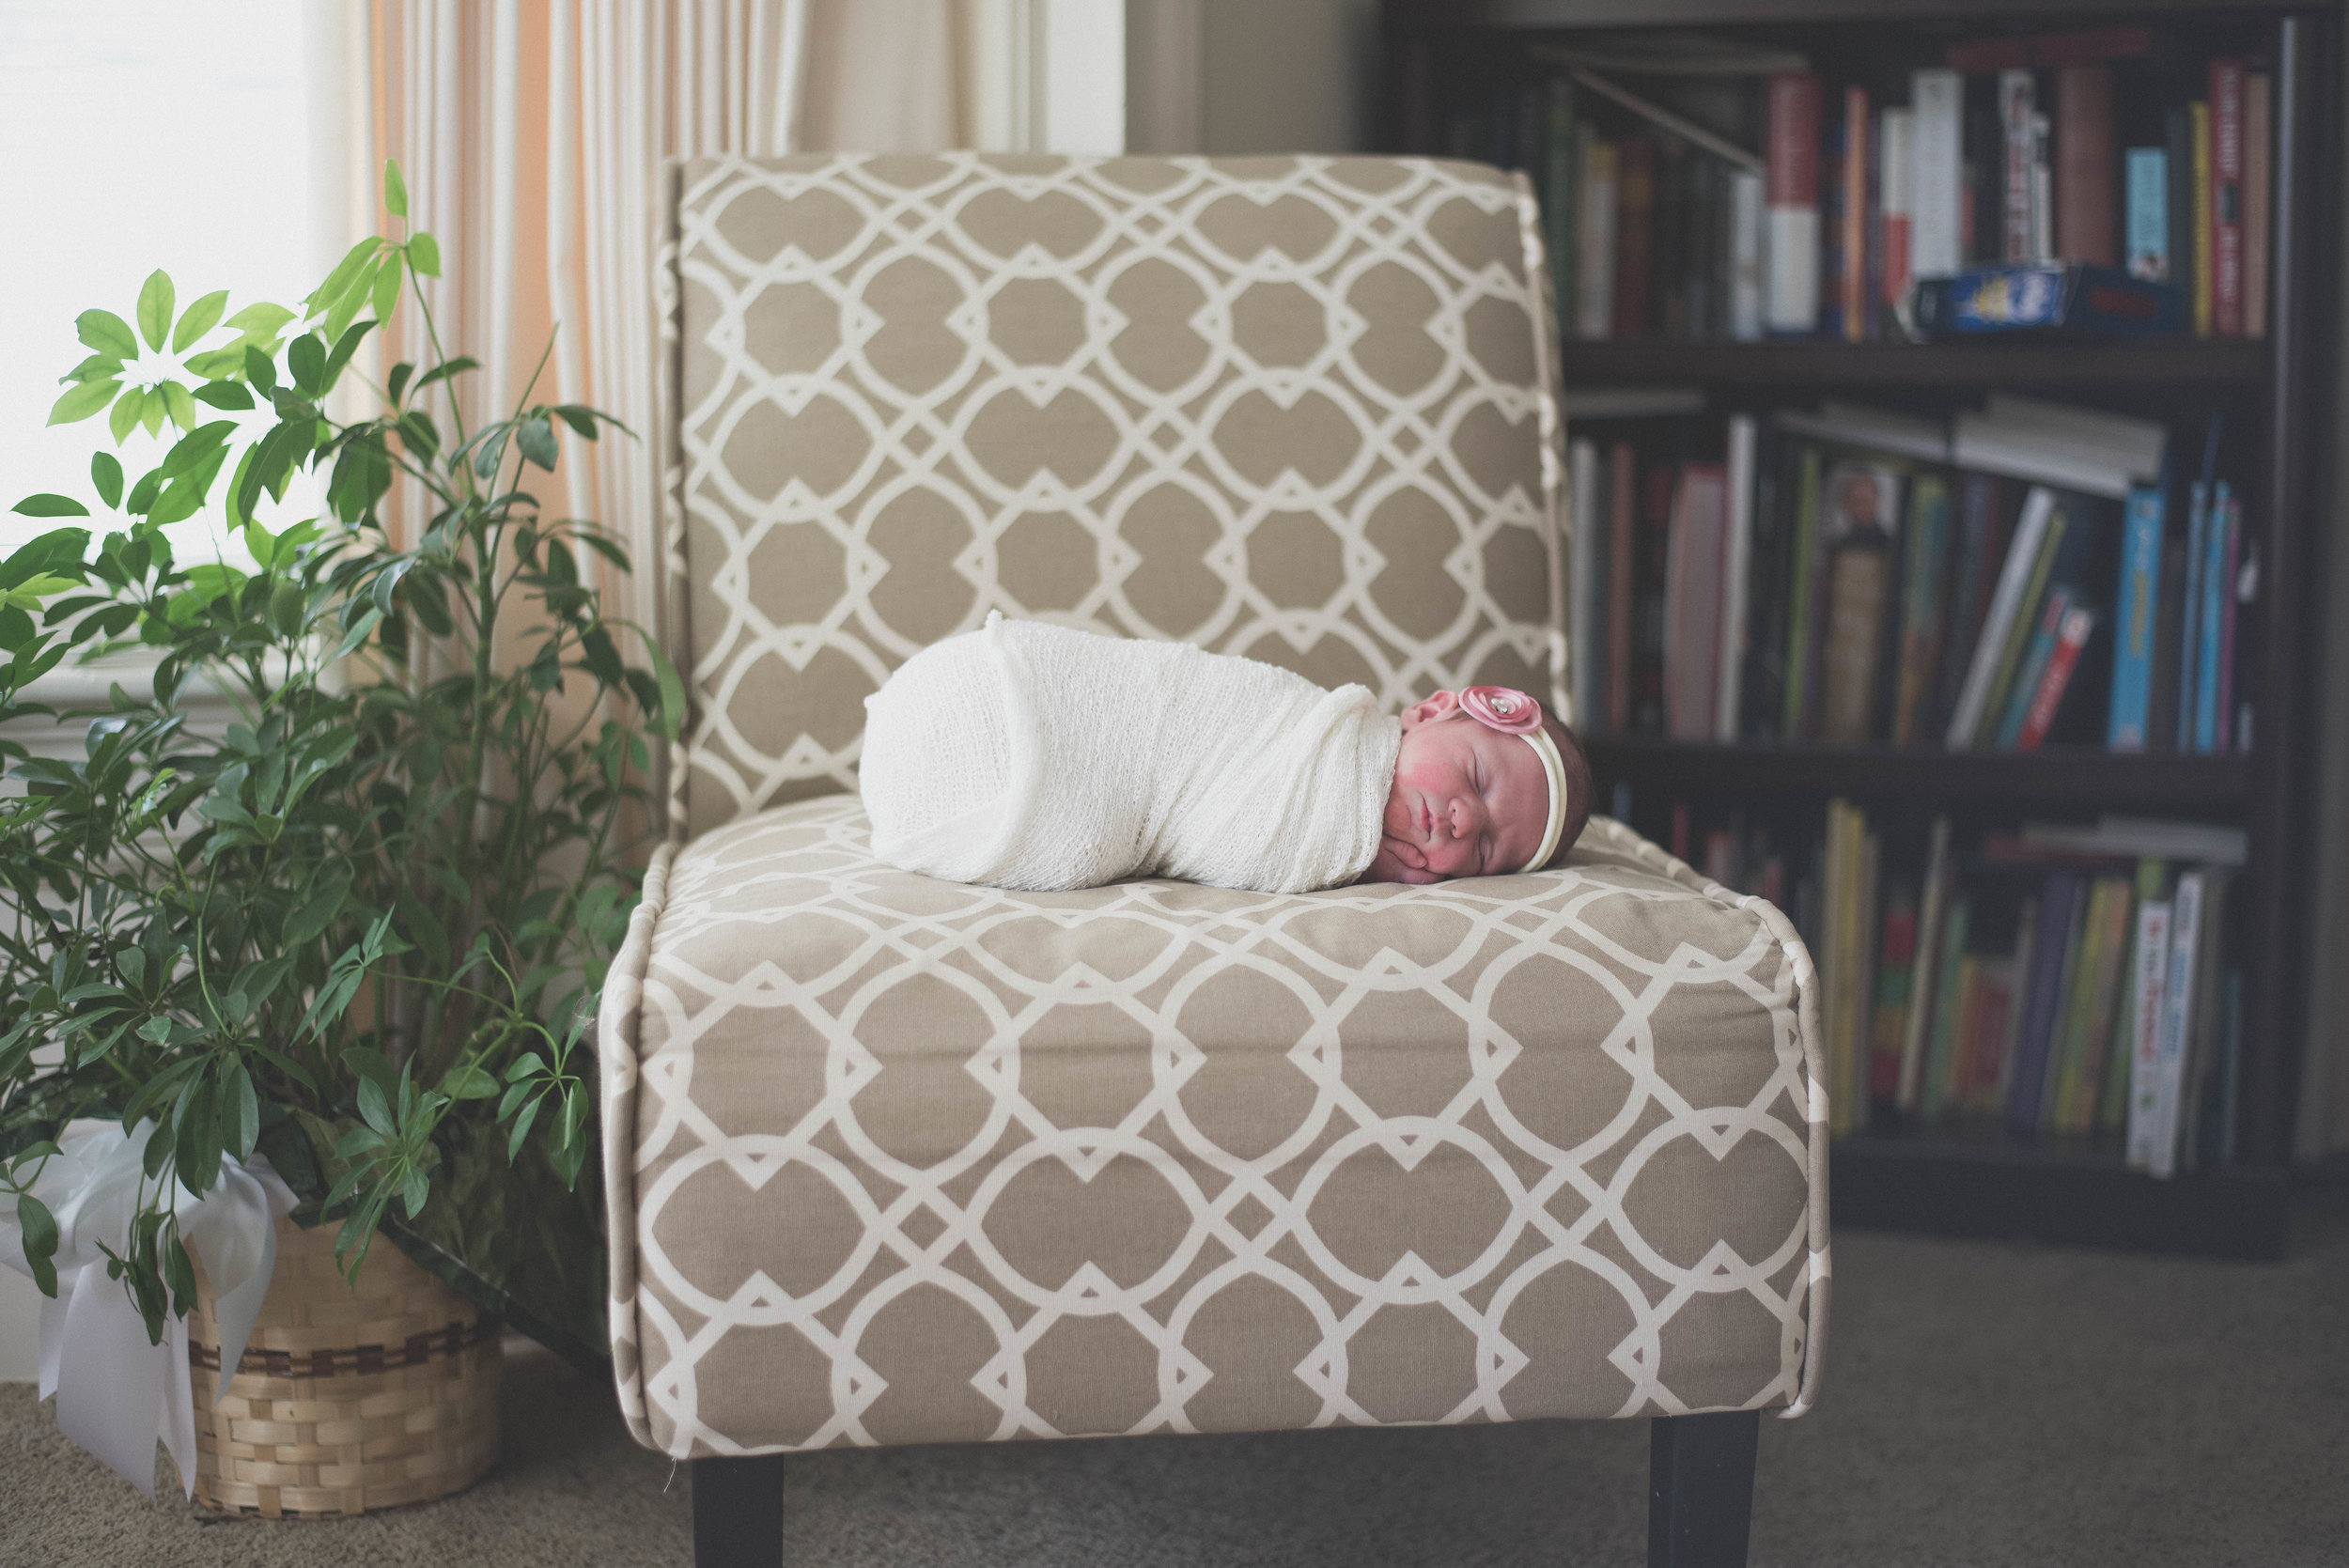 lifestyle newborn baby on chair